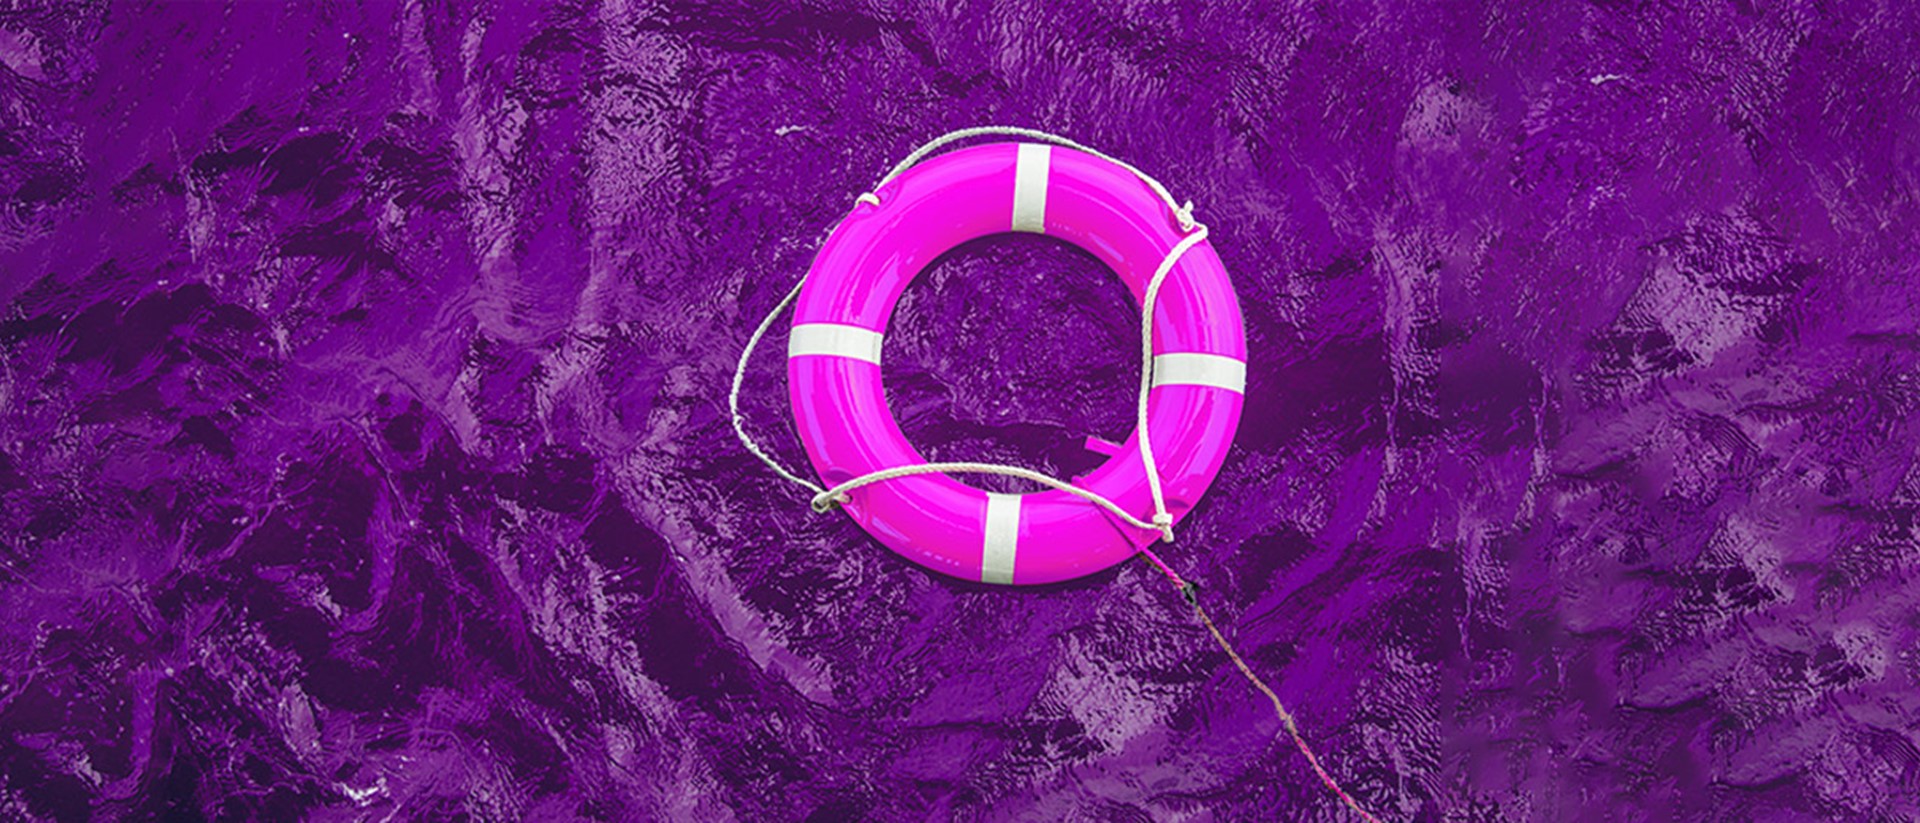 Image of a purple life raft on purple water